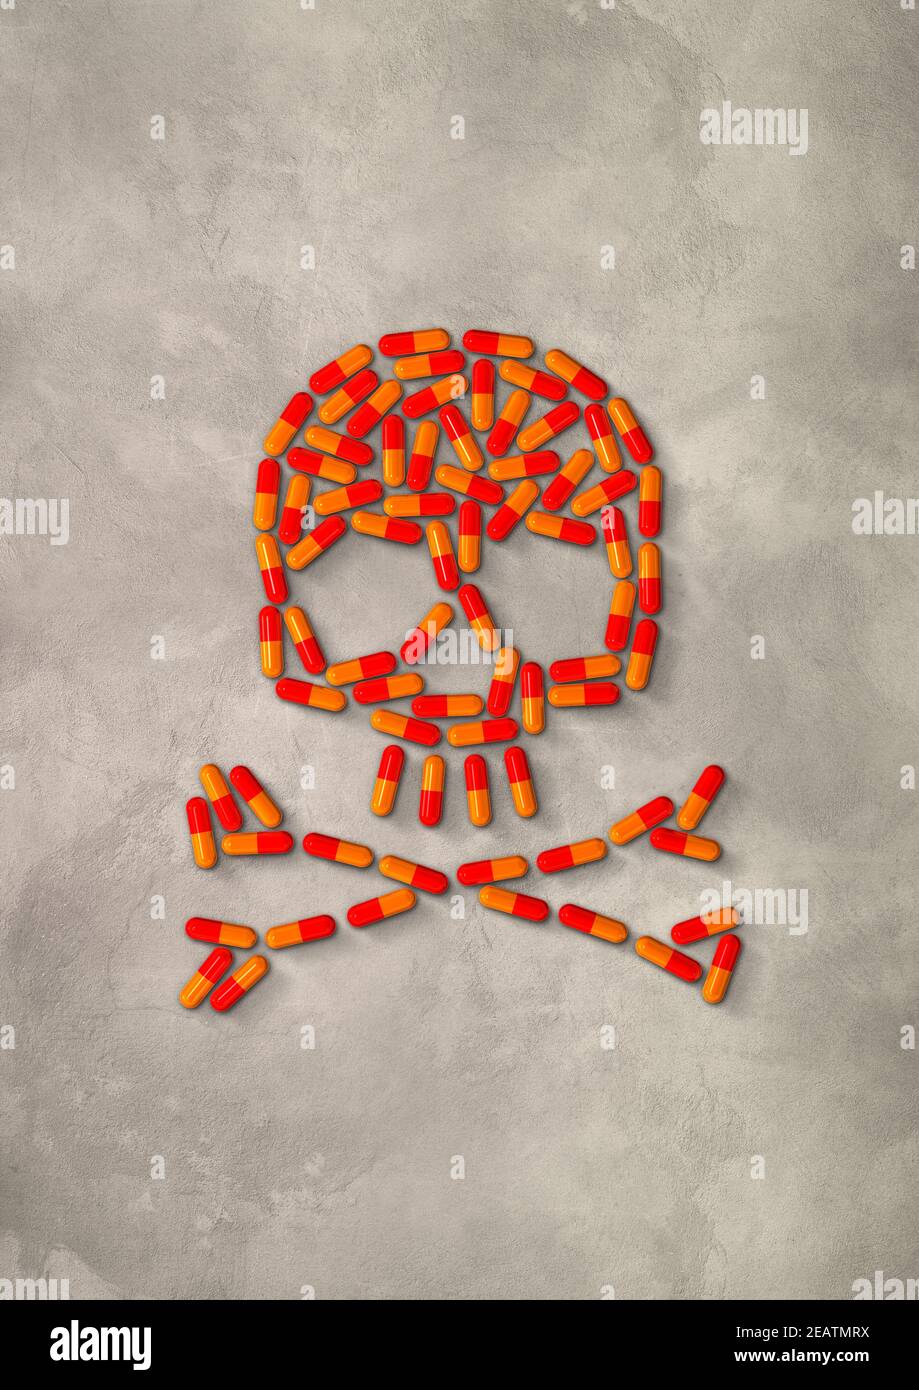 Skull made of orange capsule pills. Concrete background Stock Photo